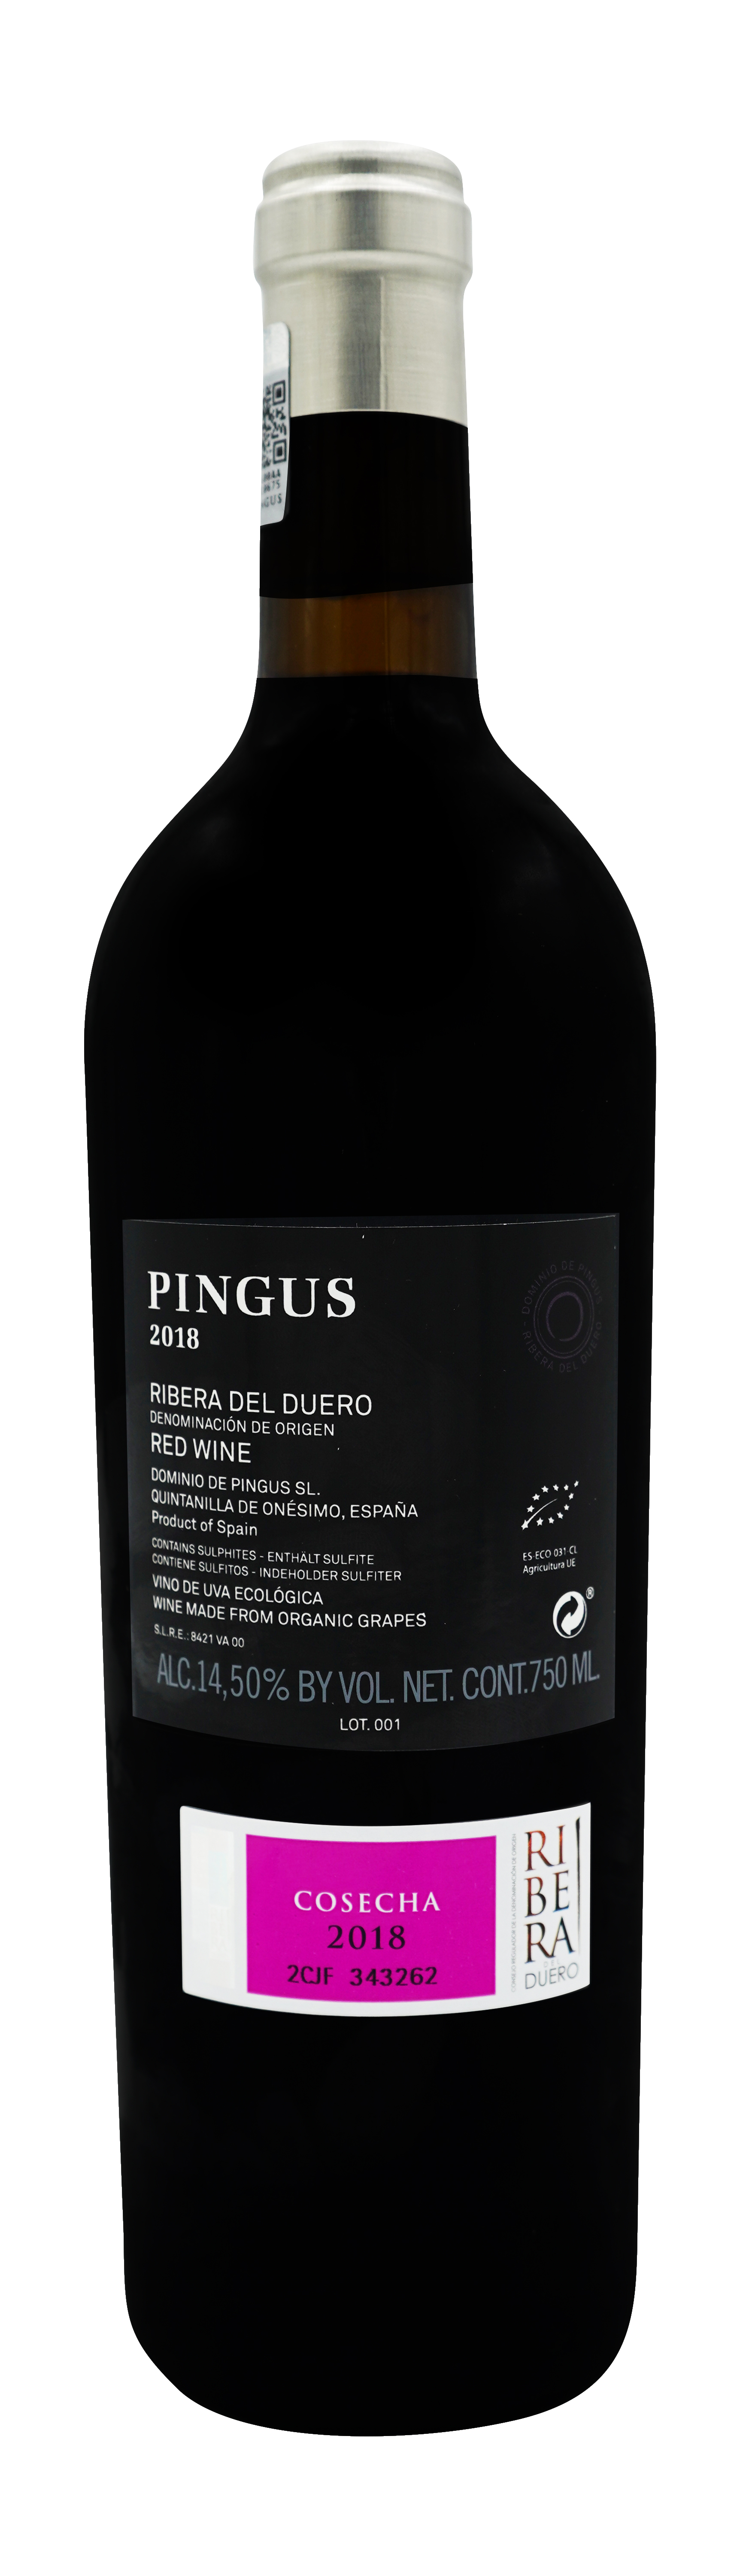 Pingus 2018 - back label